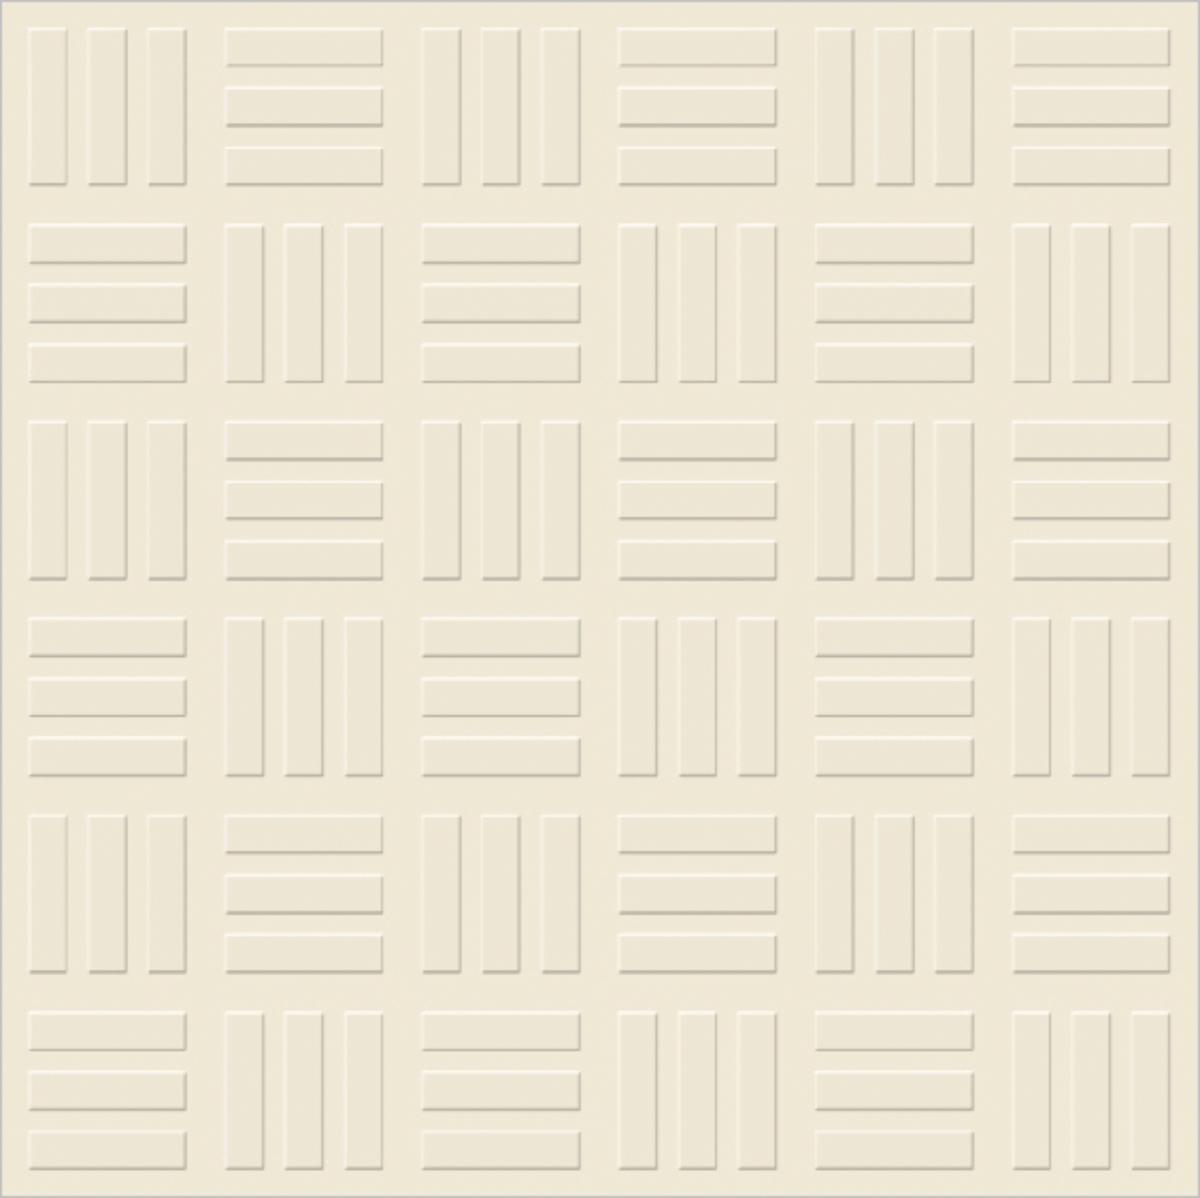 Pattern Tiles for Balcony Tiles, Parking Tiles, Outdoor Tiles, Pathway Tiles, Bar Tiles, Hospital Tiles, High Traffic Tiles, Bar/Restaurant, Commercial/Office, Outdoor Area, Outdoor/Terrace, Porch/Parking